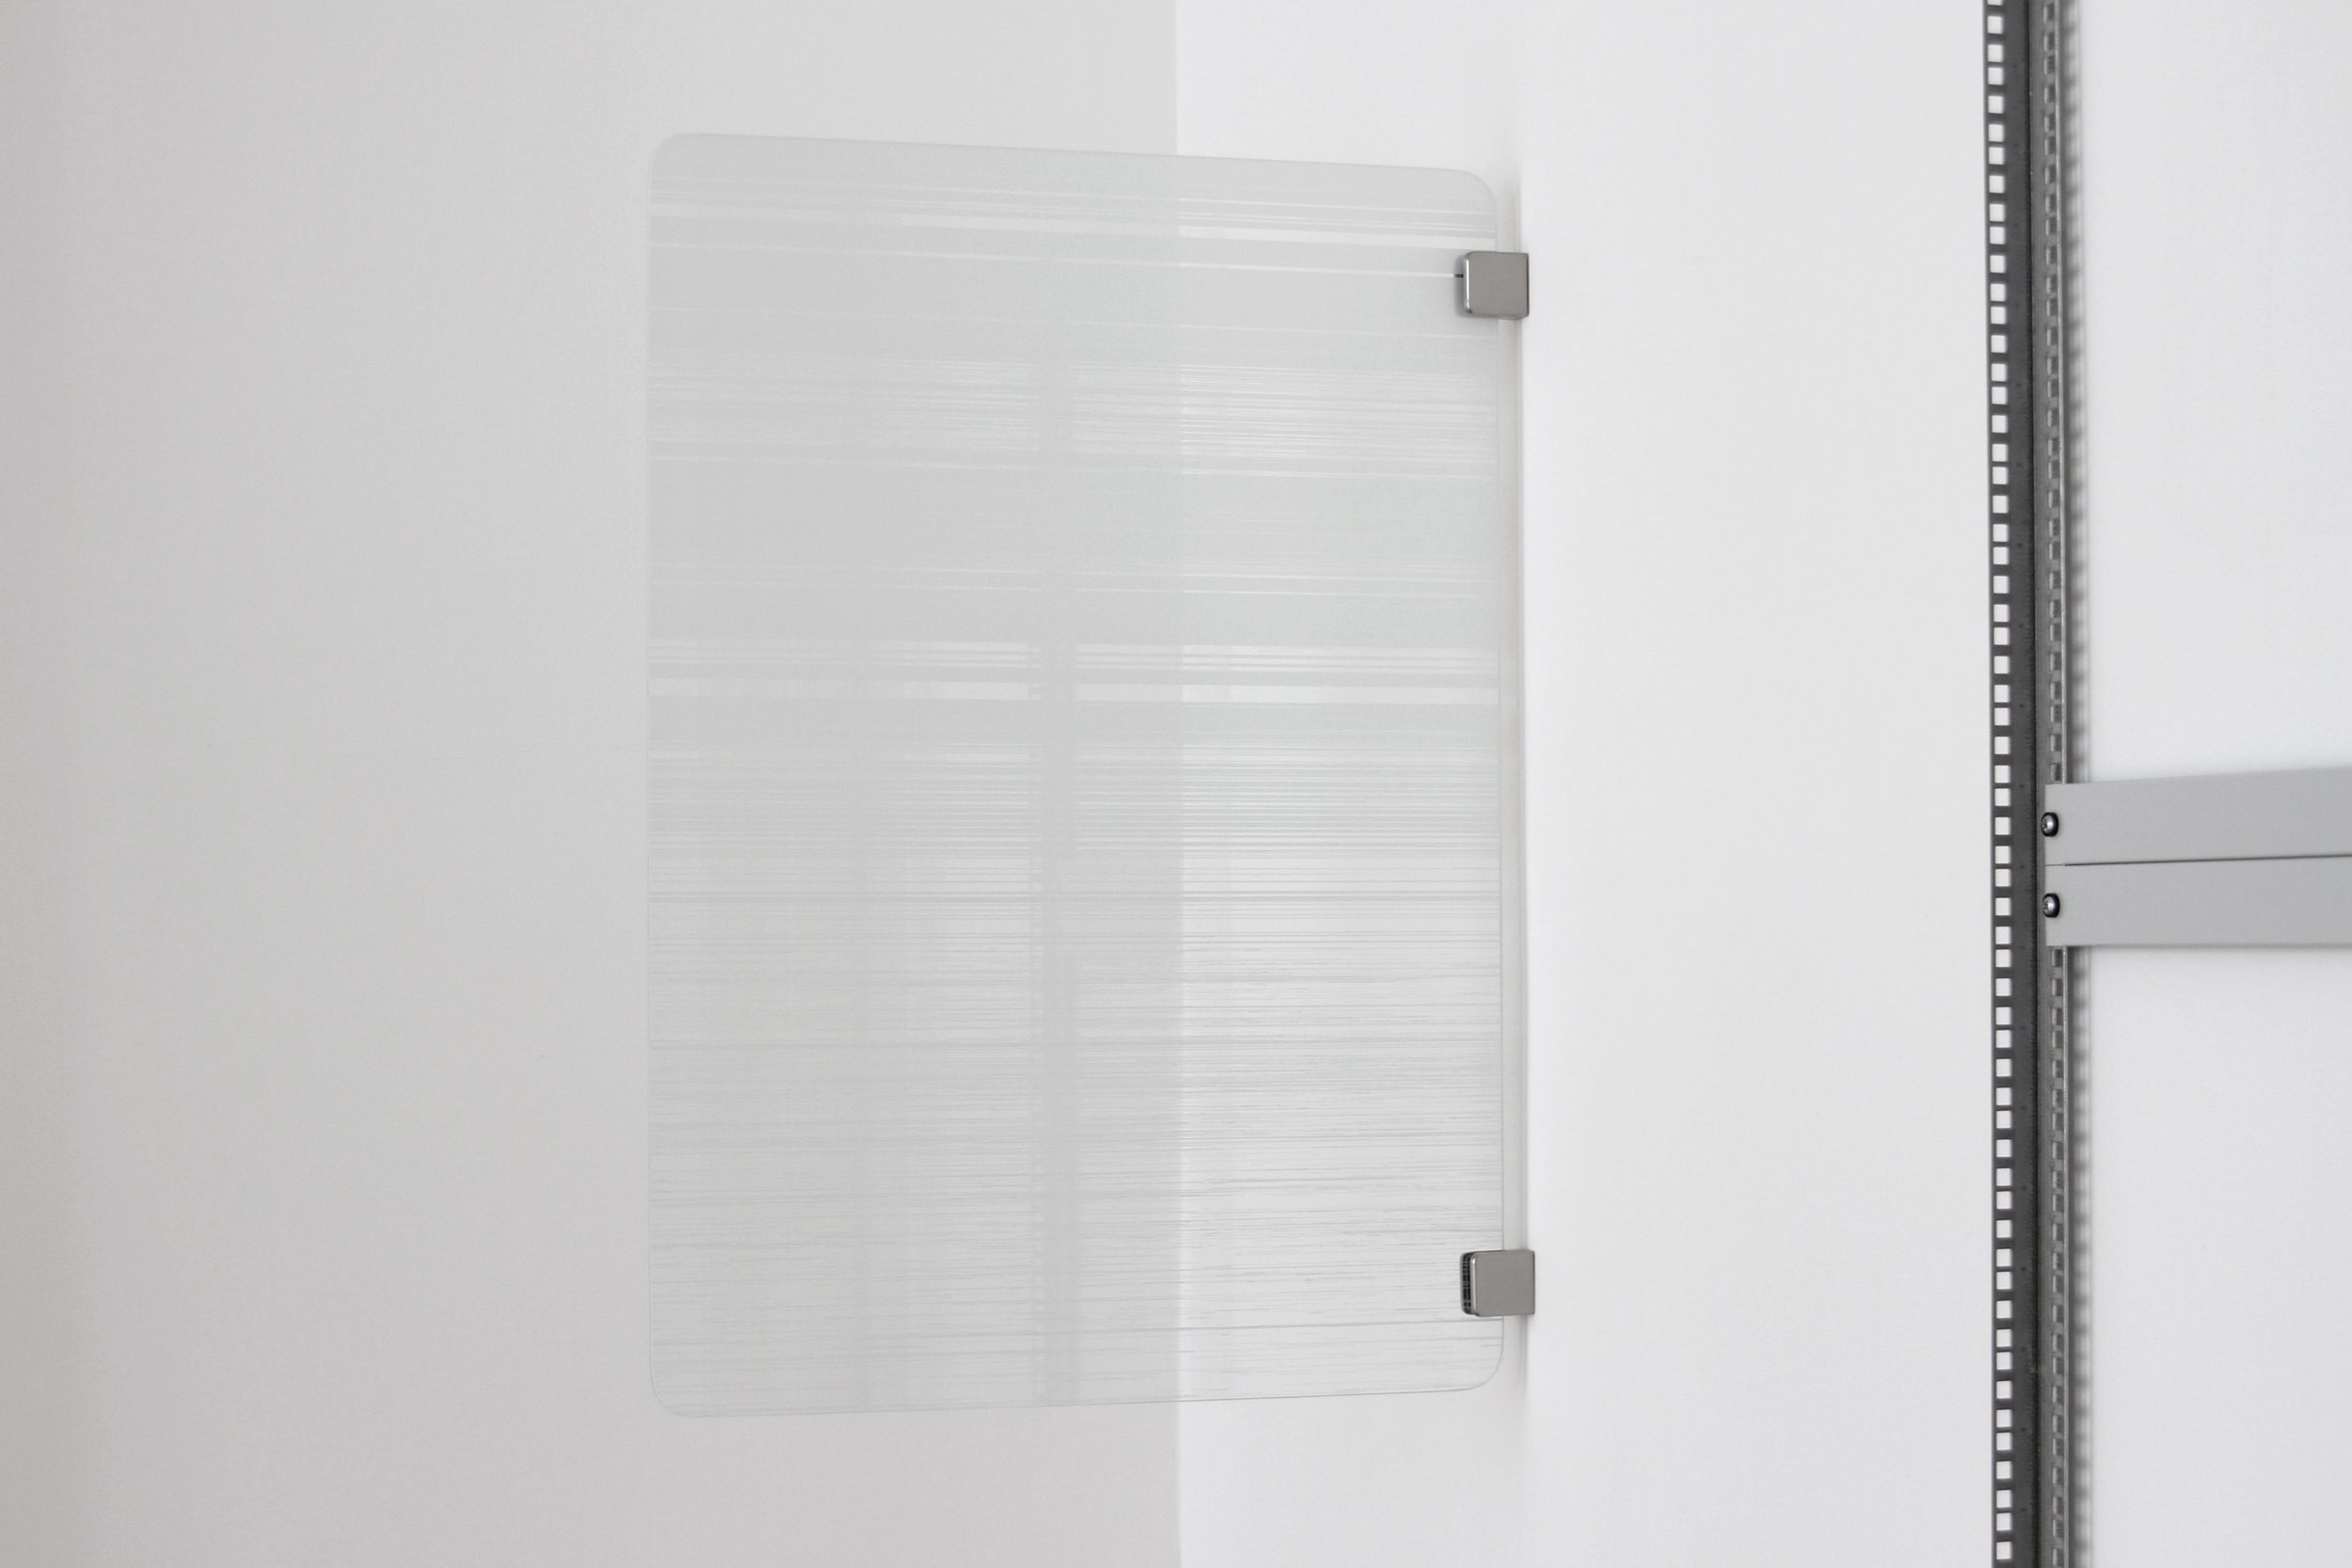 Julian Palacz, Fragmentierung Variation 2, 2017, UV-print on float glass 85 x 60 cm, 1 + 1AP 